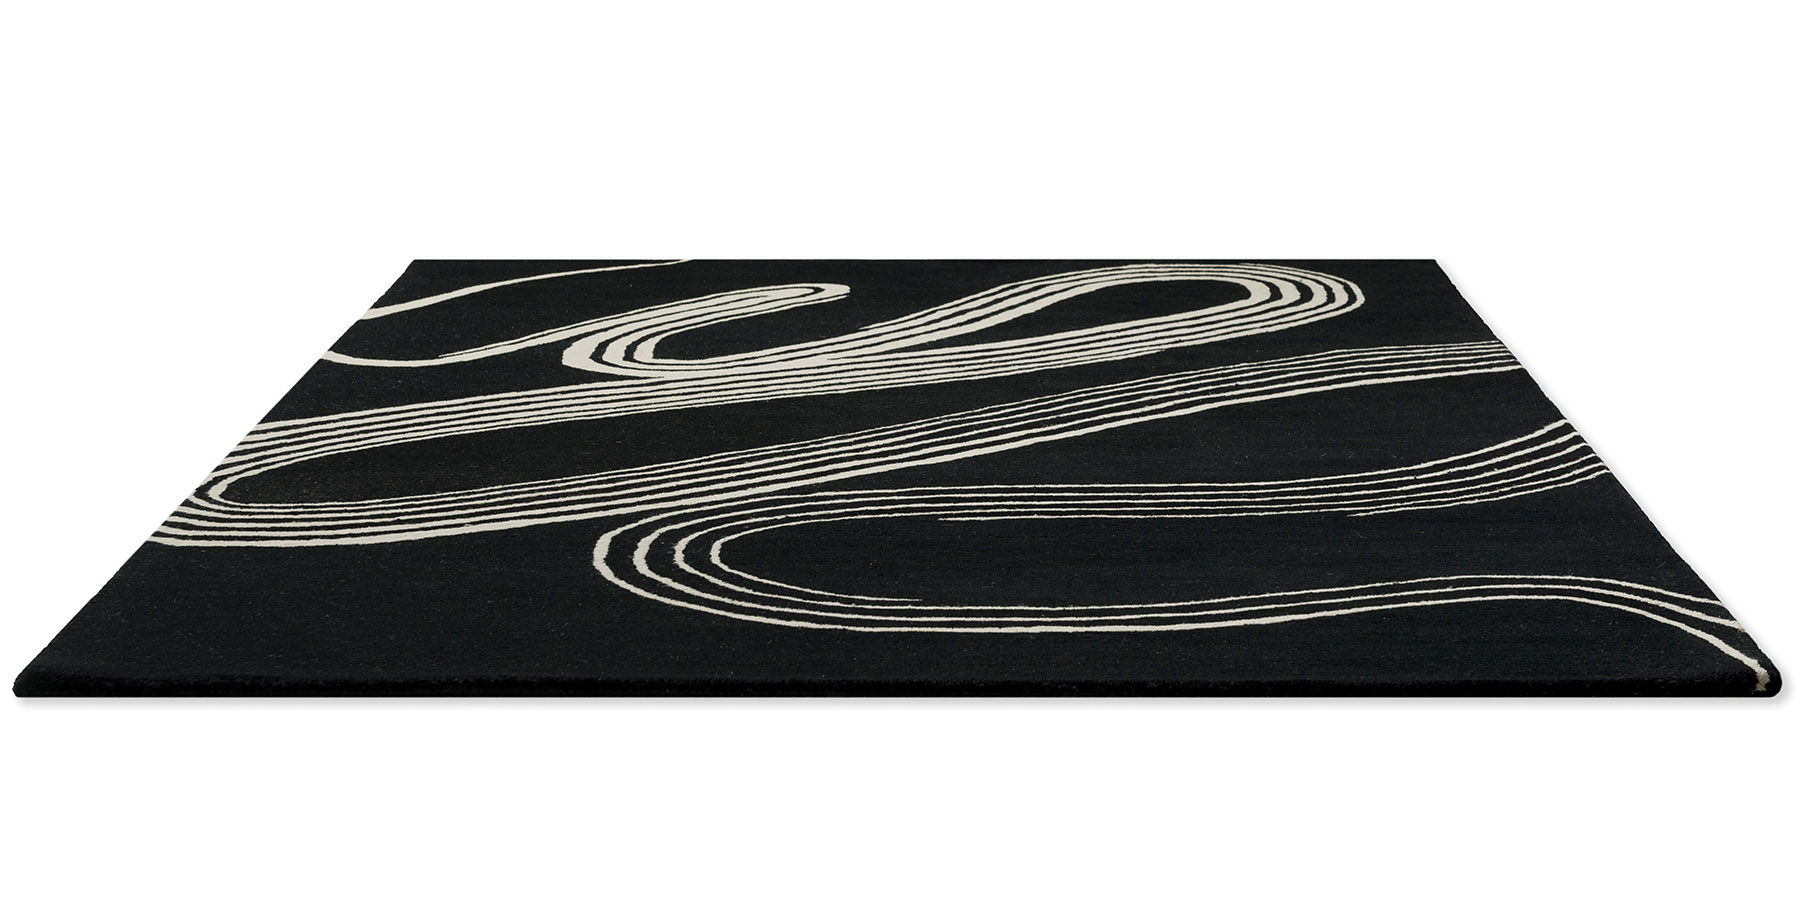 Decor Flow Caviar Handwoven Rug ☞ Size: 5' 3" x 7' 7" (160 x 230 cm)